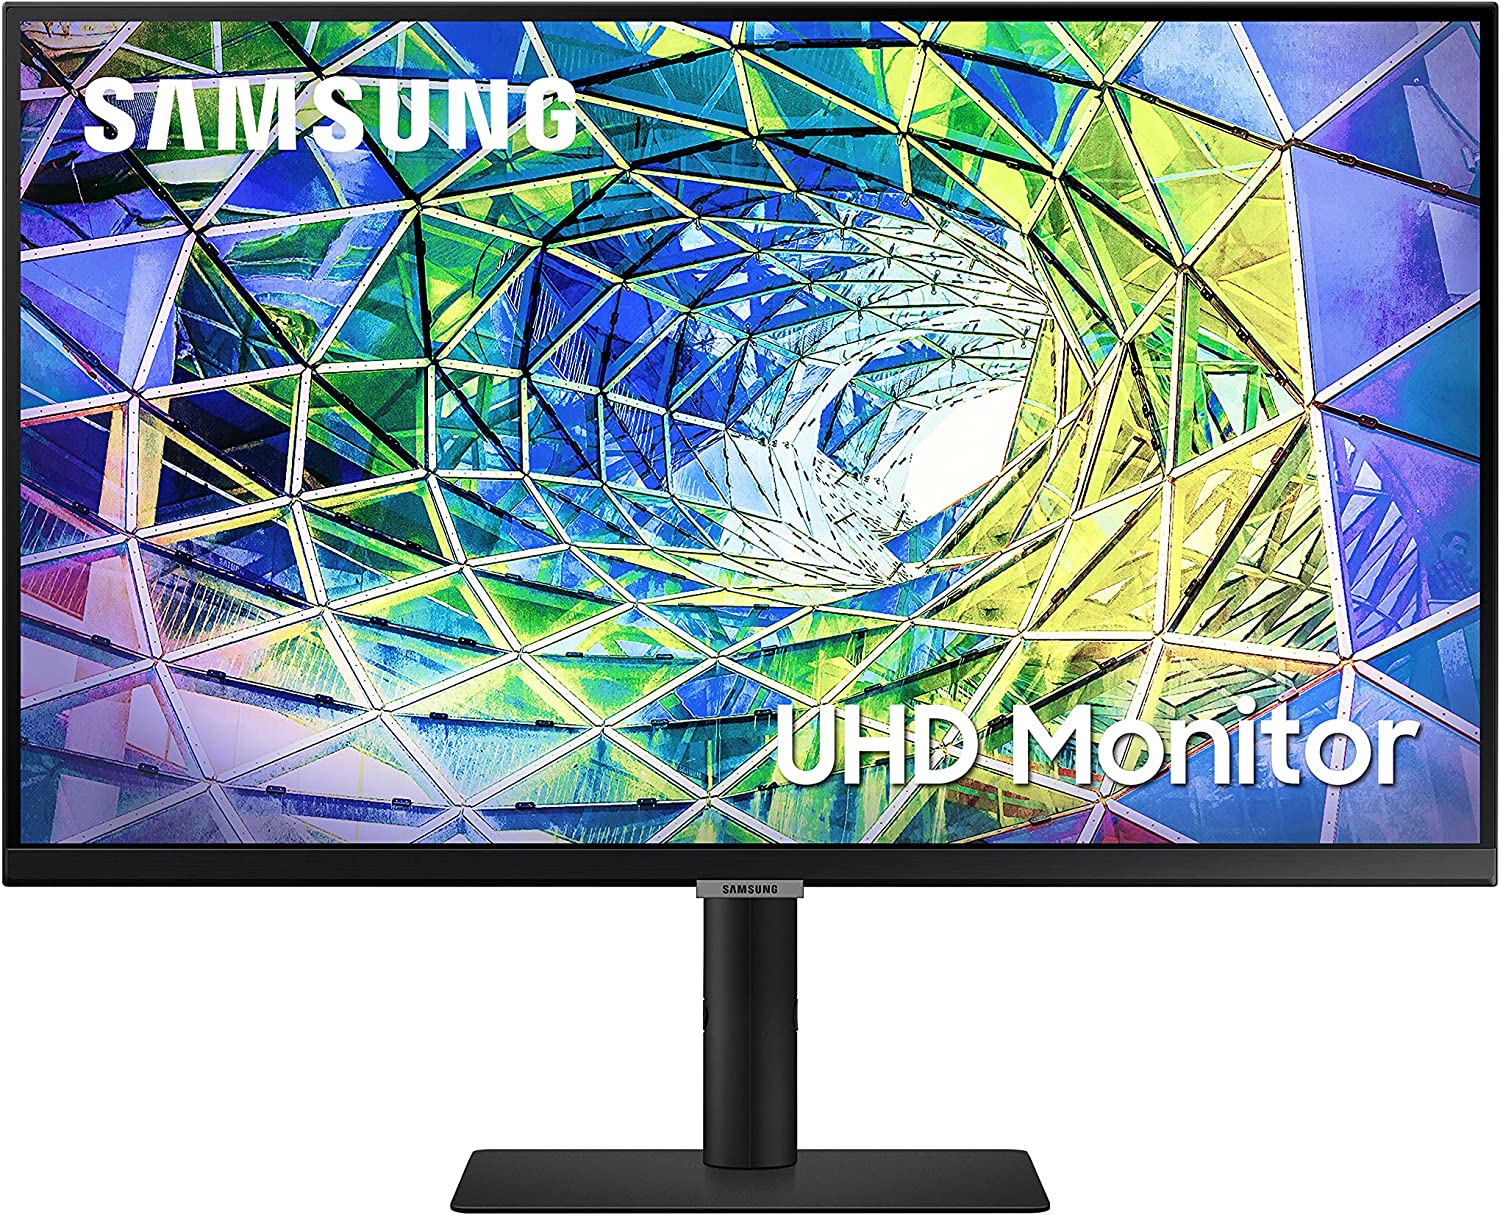 SAMSUNG S80A 27" 4K IPS UHD 10-bit HDR10 Monitor /w Speakers @ $244.66 + F/S